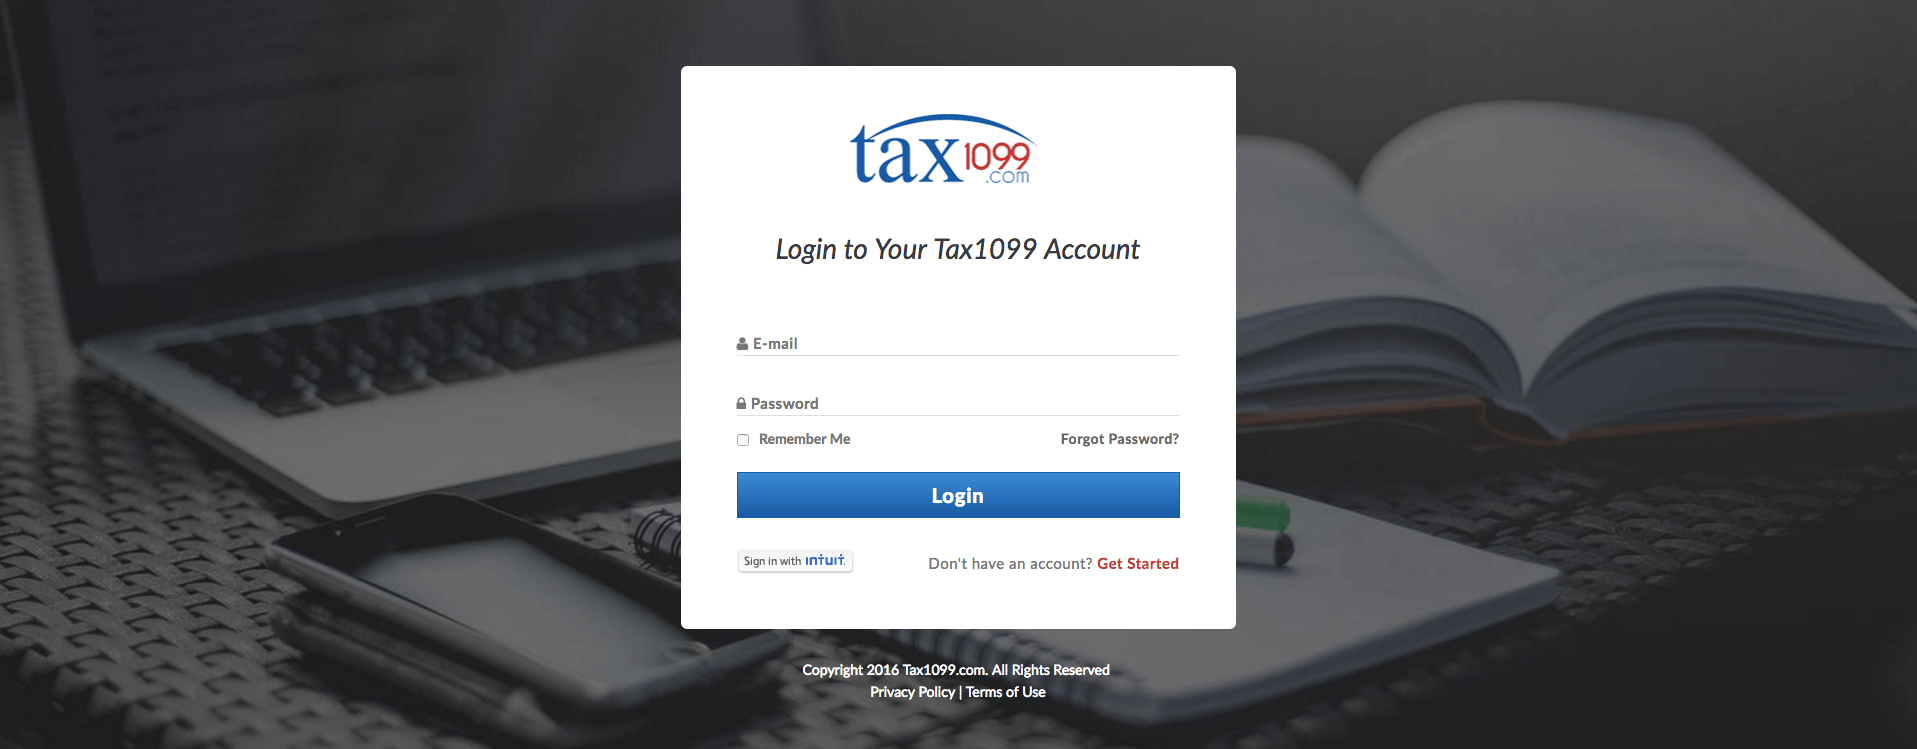 Filing 1099 online through Tax 1099 | Help | Zoho Books